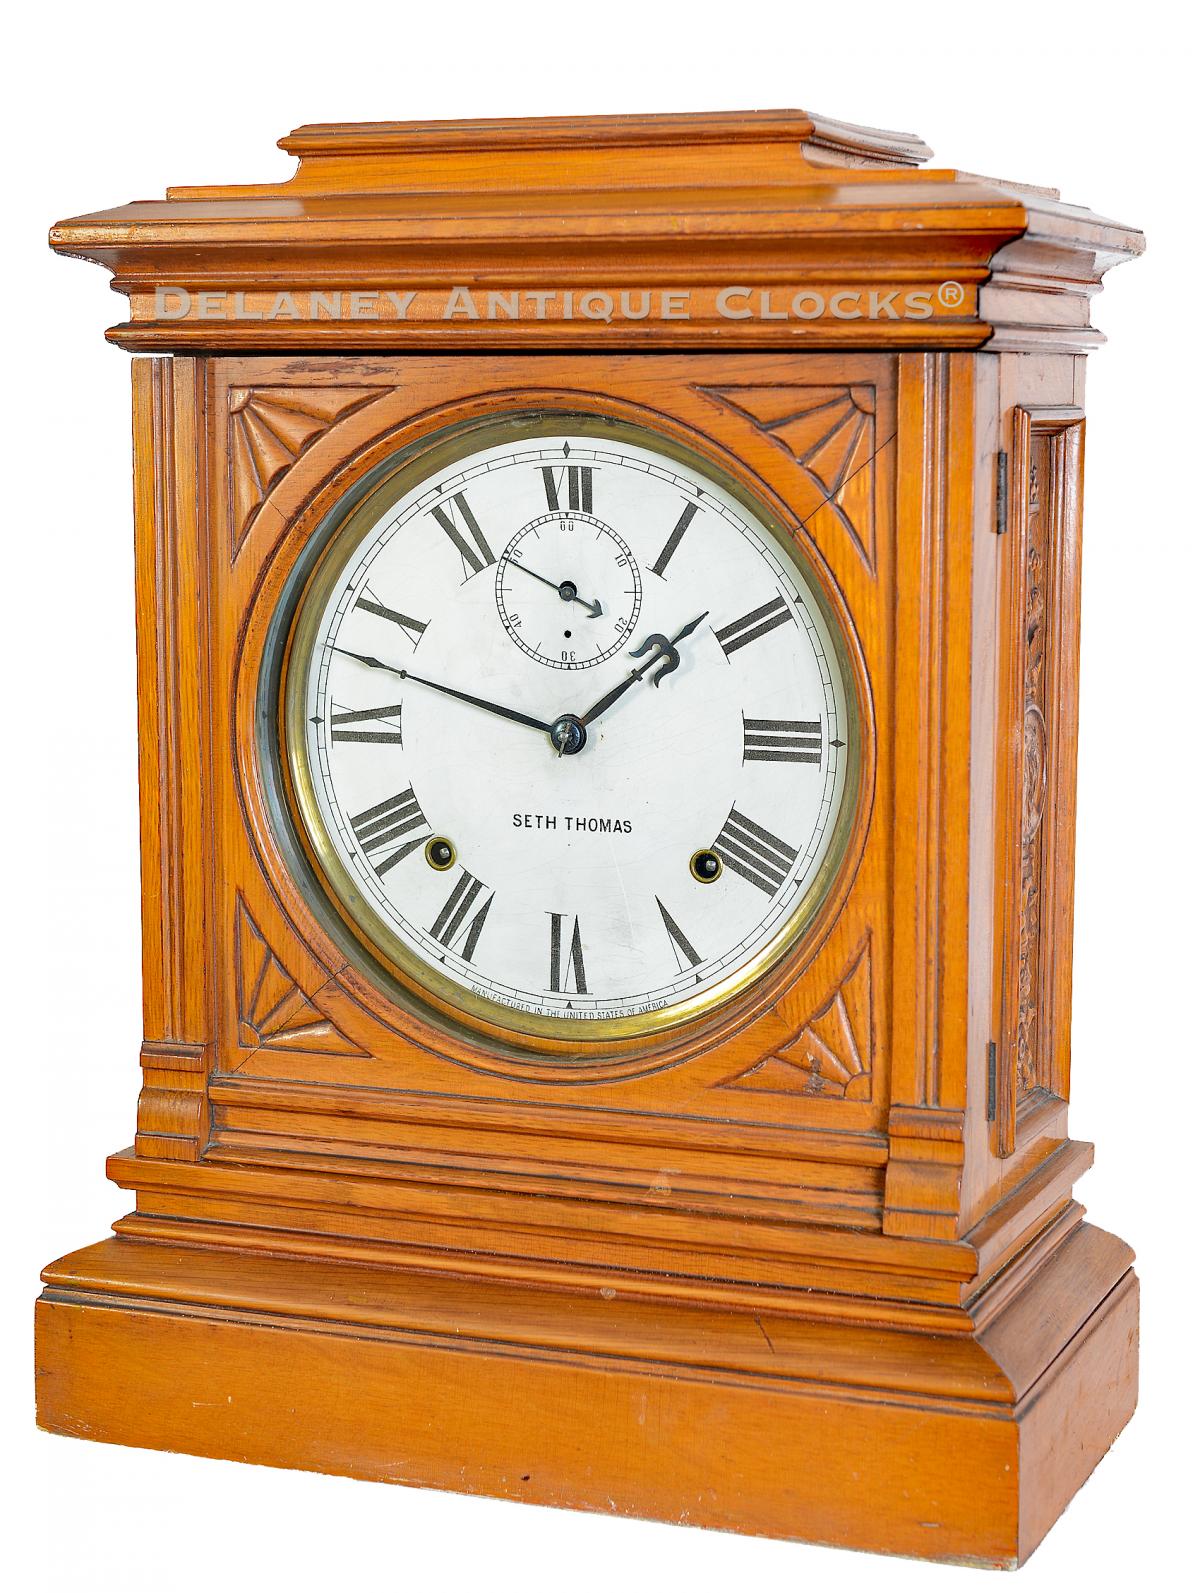 The Seth Thomas Clock Company. Hotel mantel clock. 223090. Delaney Antique Clocks.